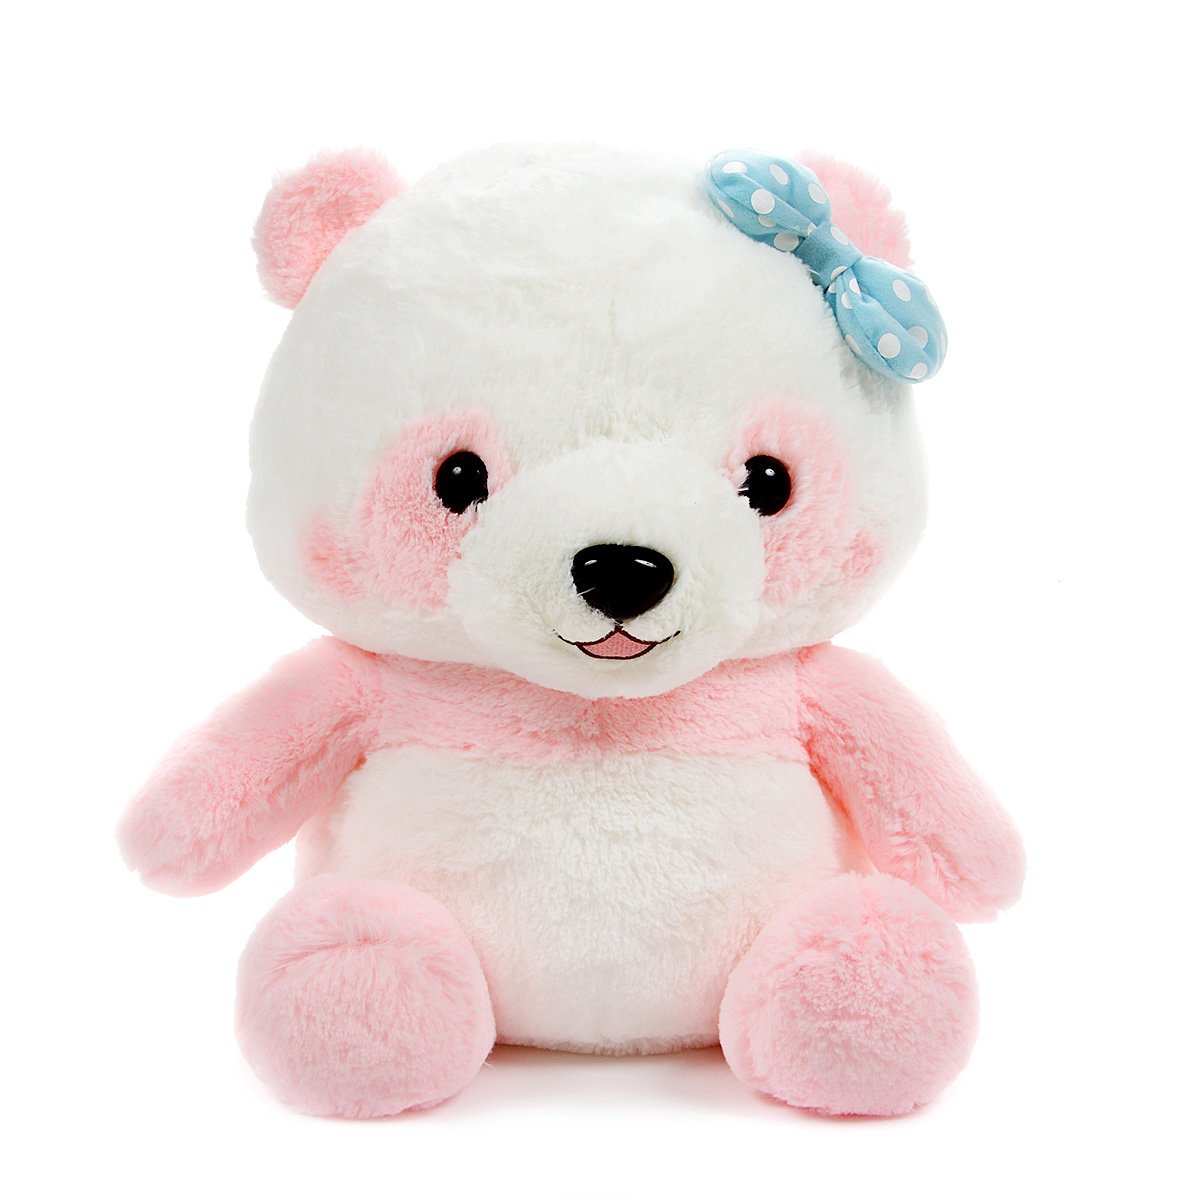 Plush Panda, Amuse, Honwaka Panda Baby, Yume Peach, White / Pink, 16 Inches Big Size